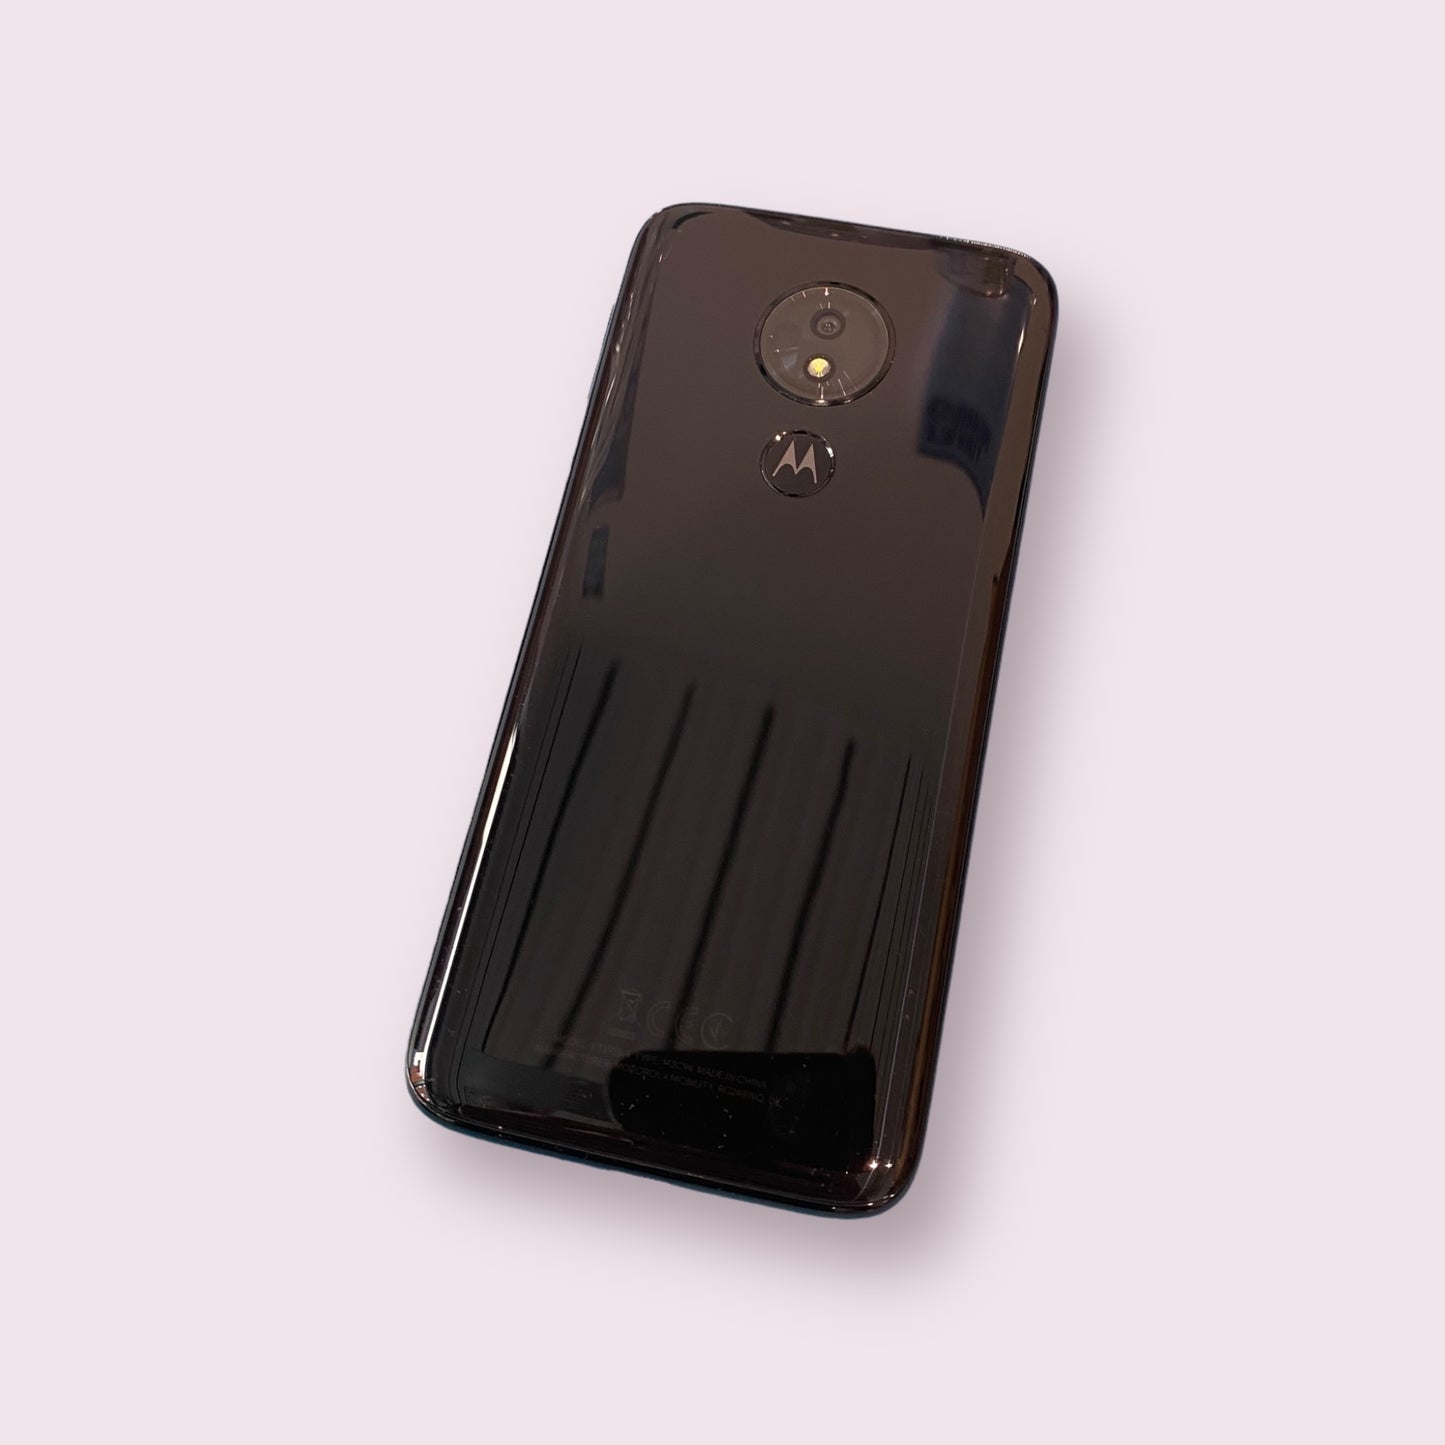 Motorola Moto G7 Power XT1955 64GB Android Smartphone Black - Unlocked - Grade B